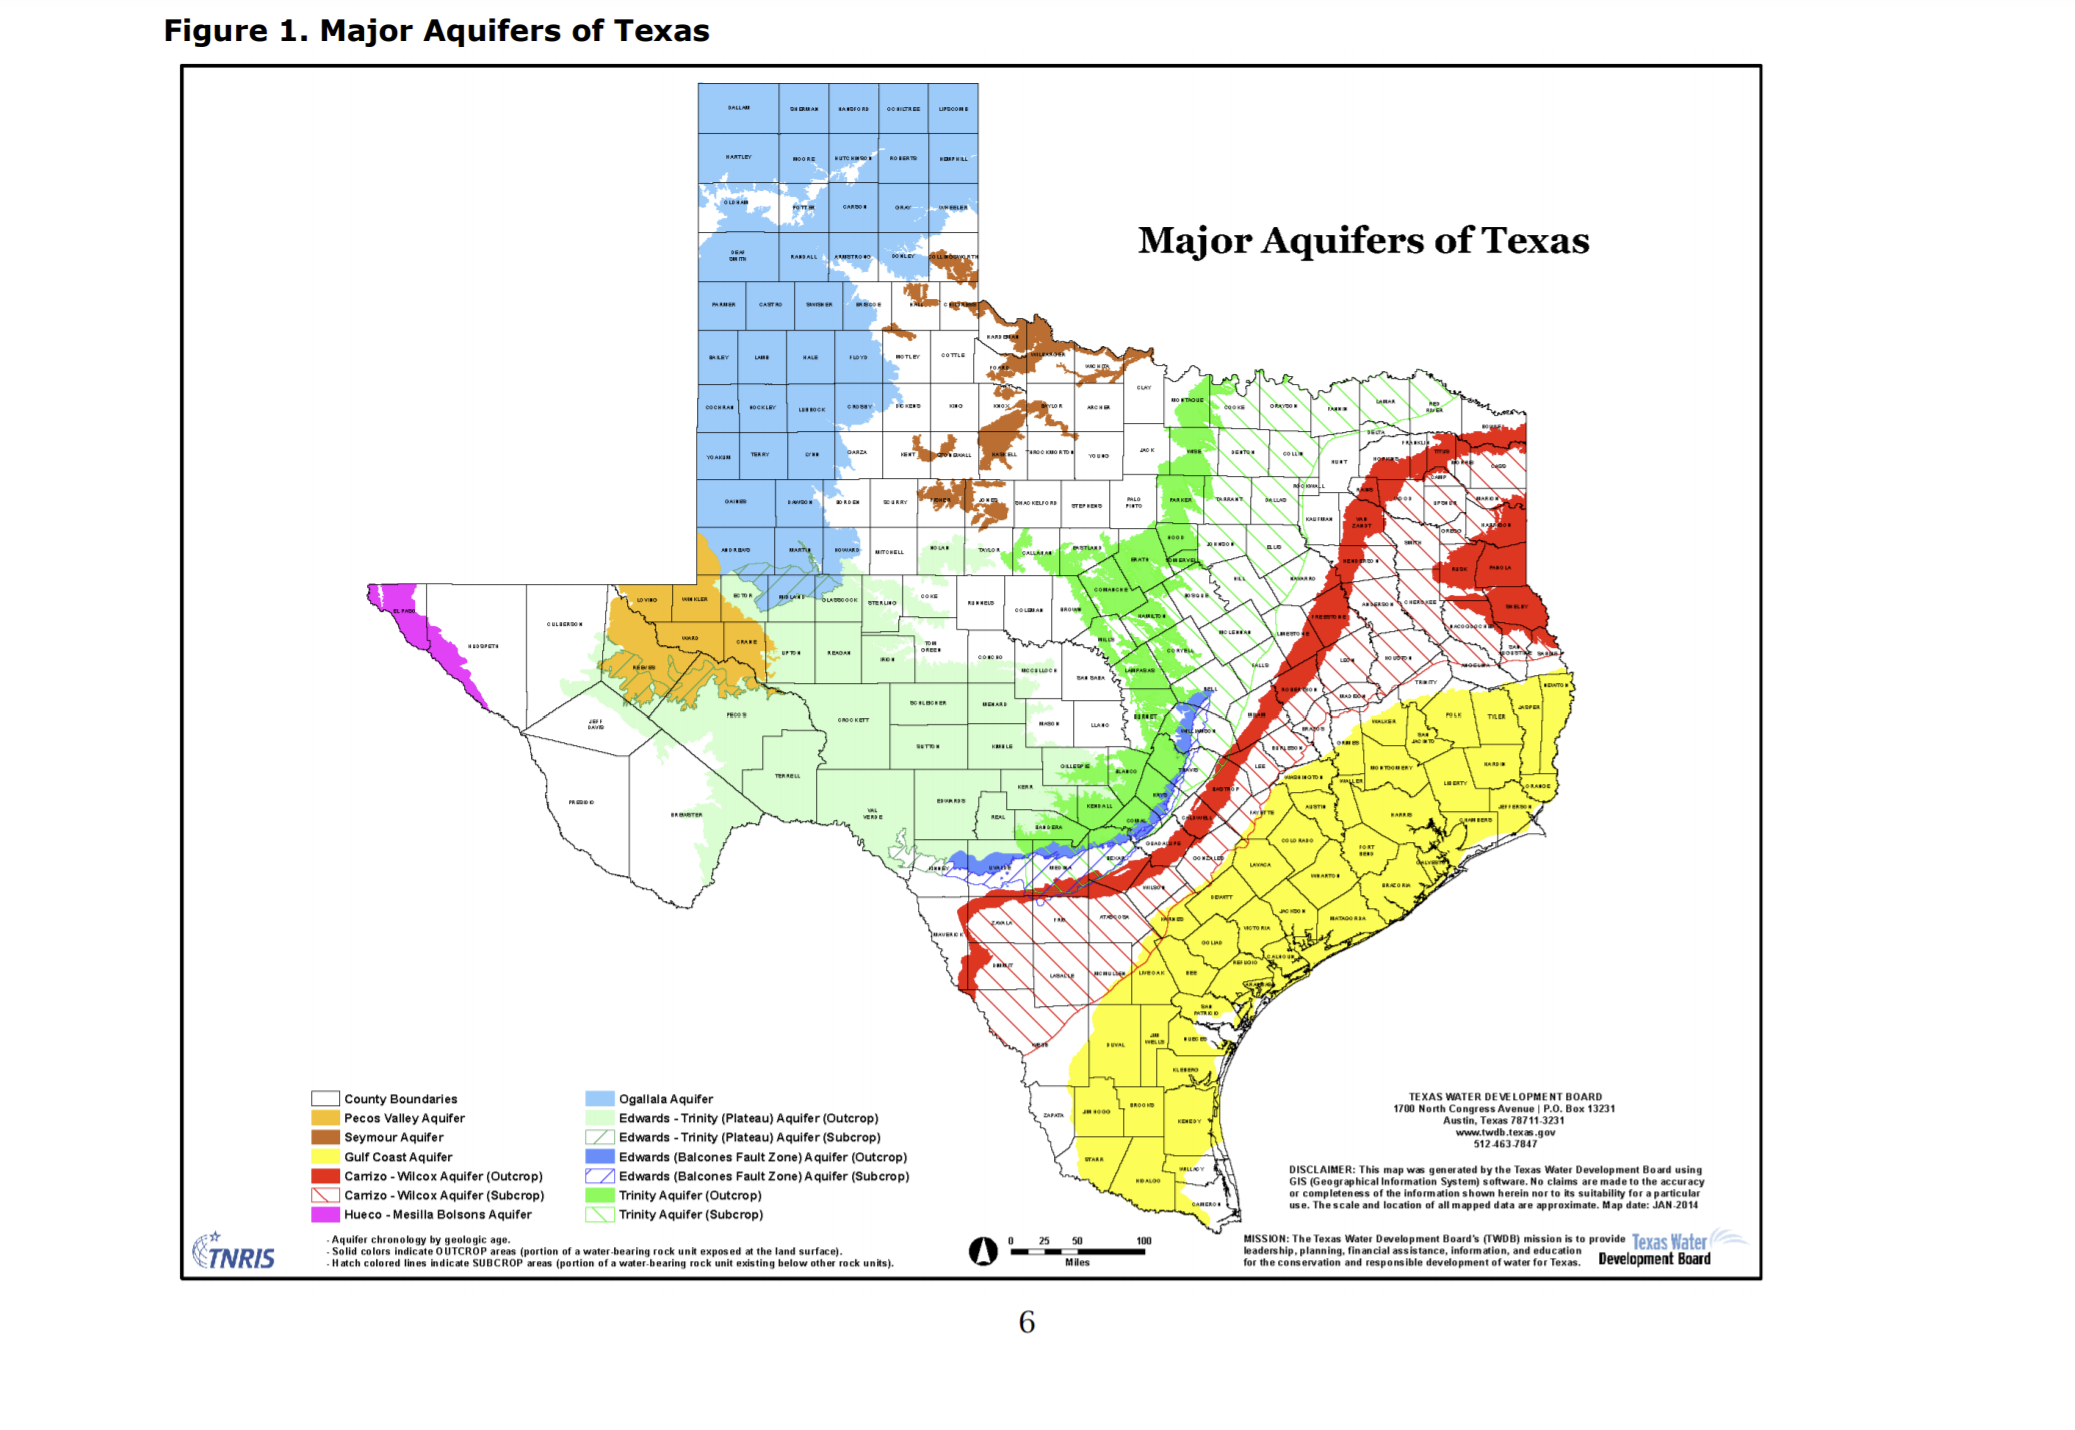 Major Aquifers in Texas